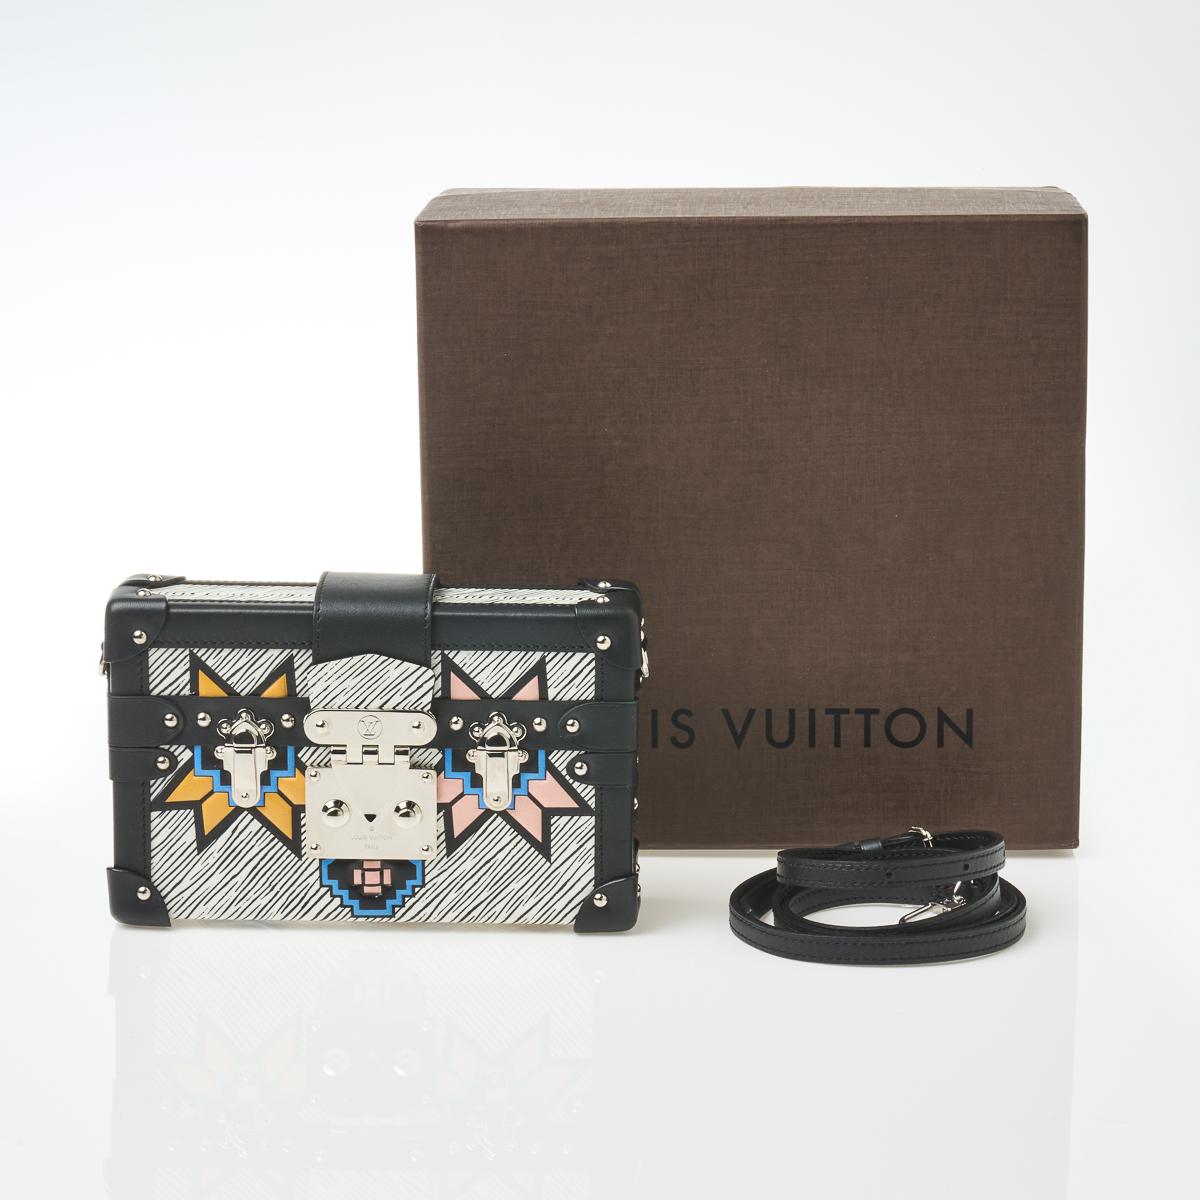 Louis Vuitton Limited Edition Malletage Petite Malle Bag